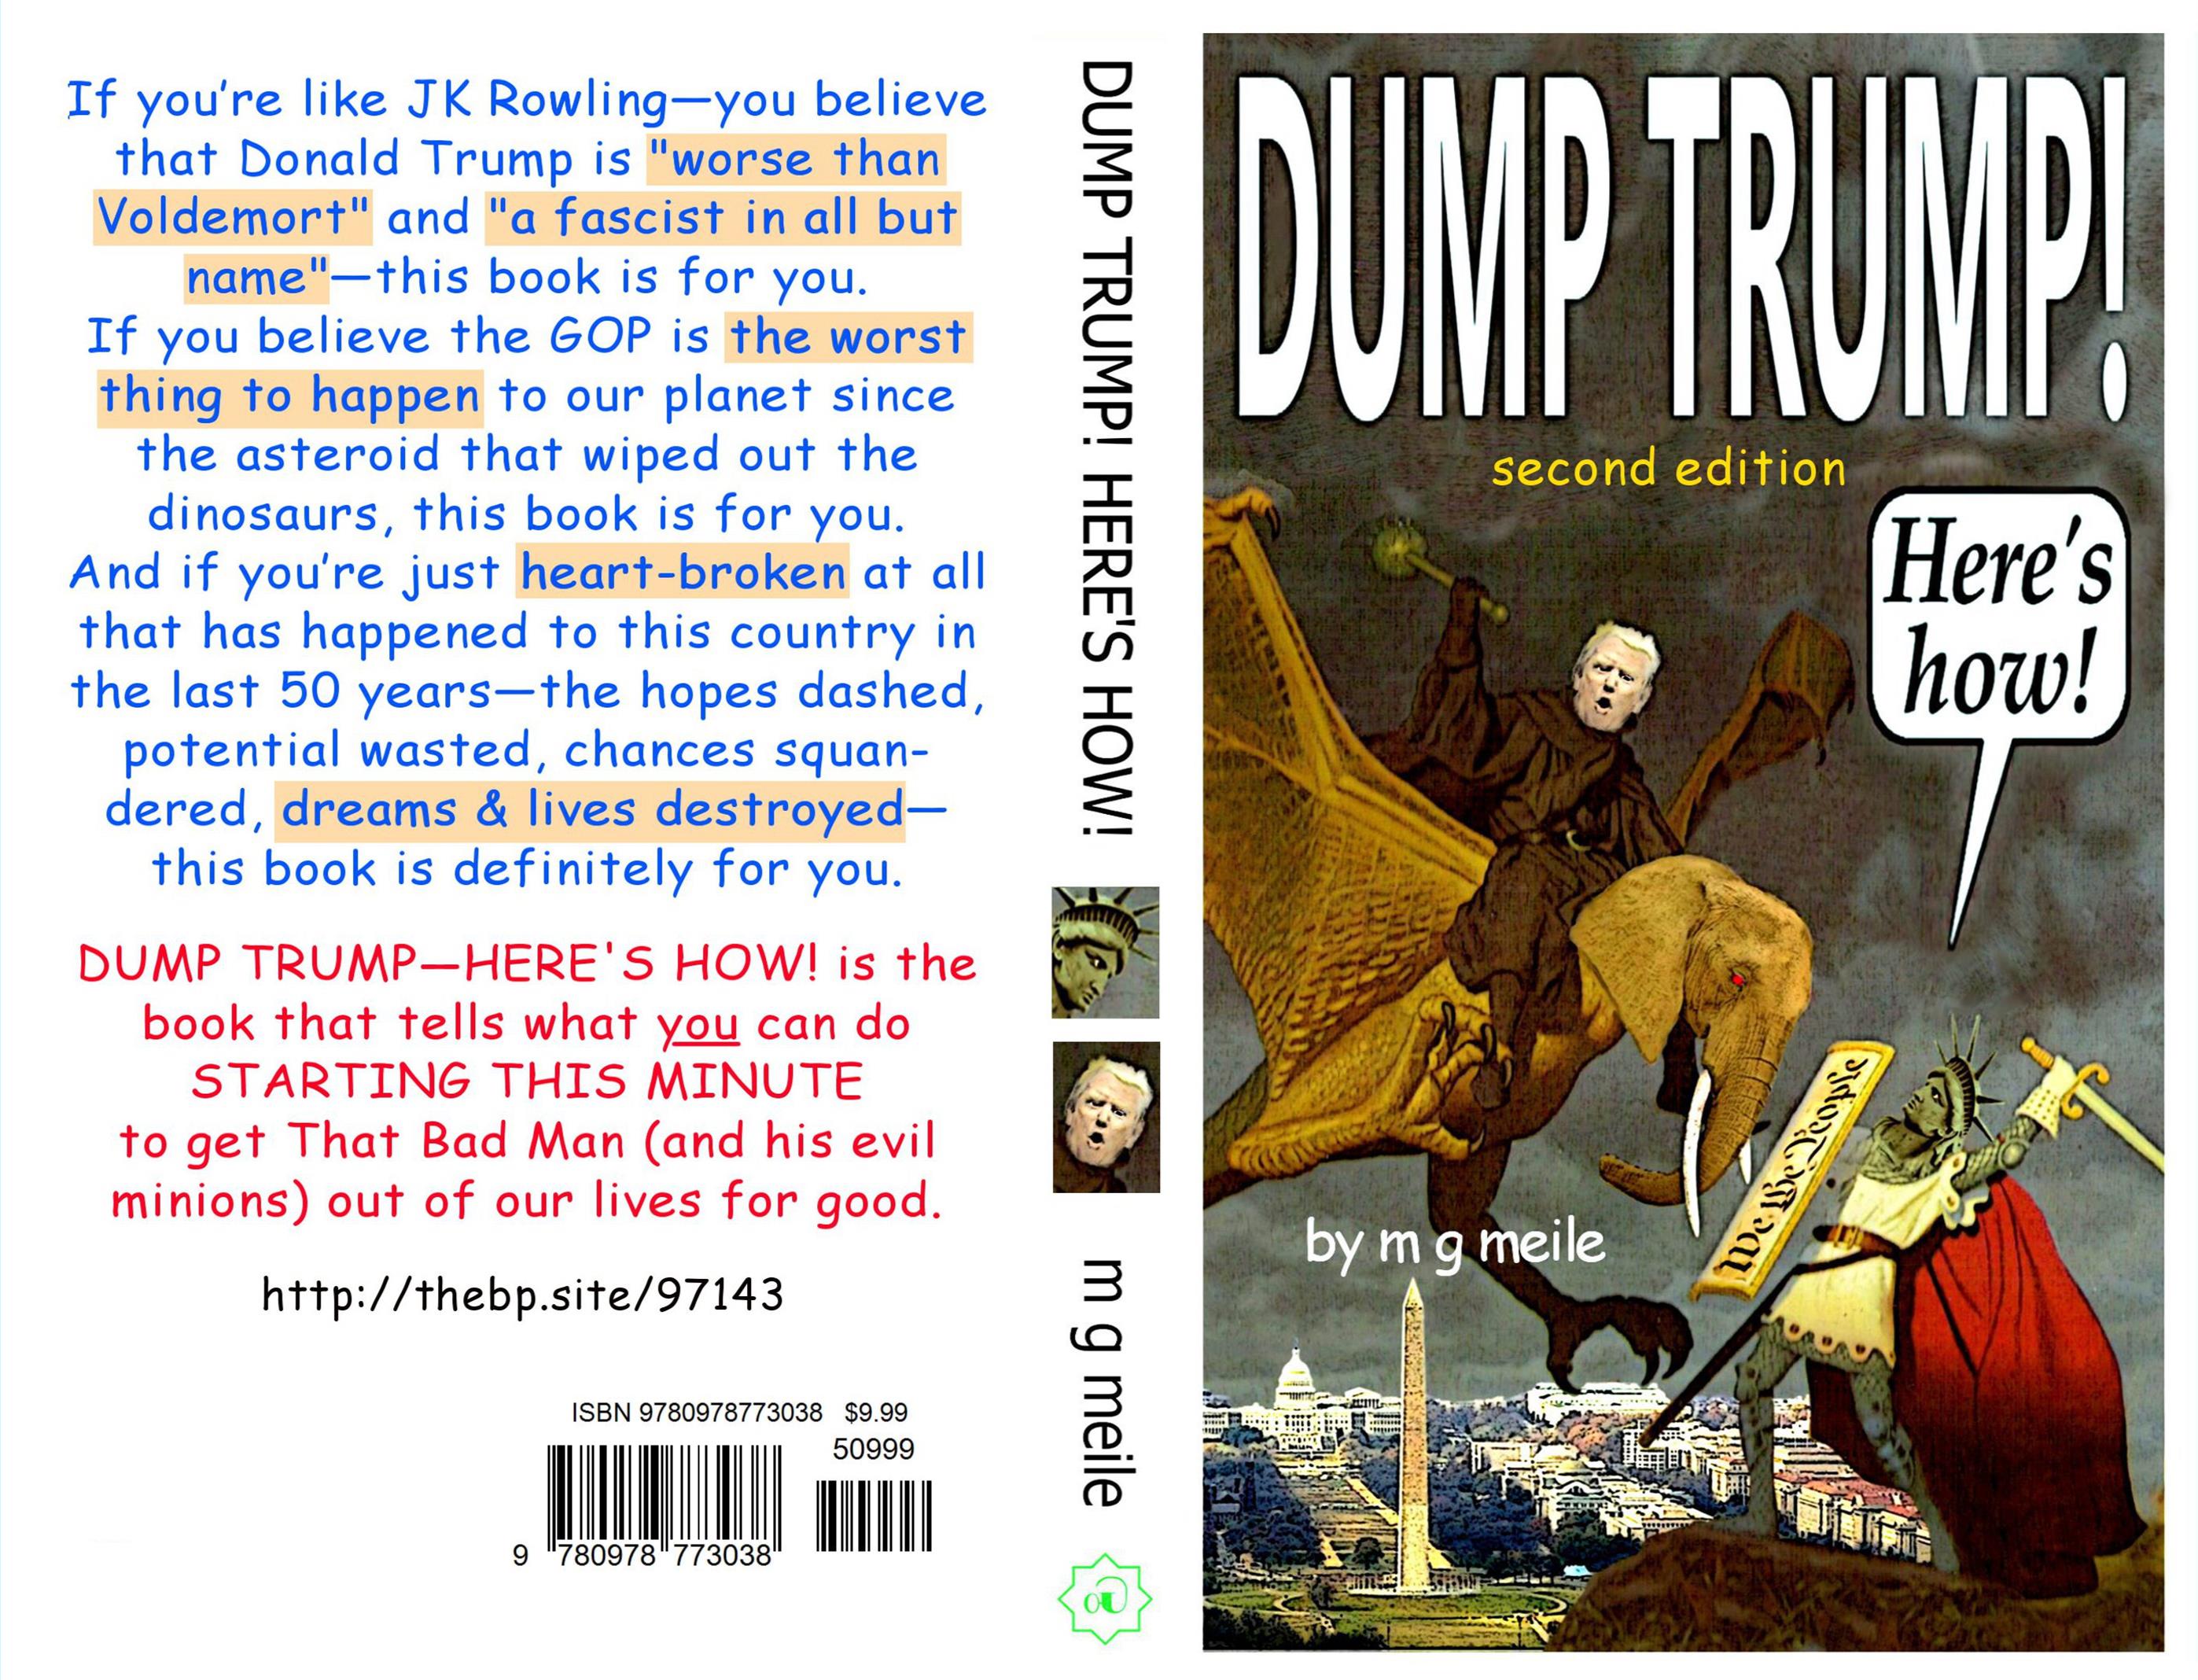 Dump Trump! Here